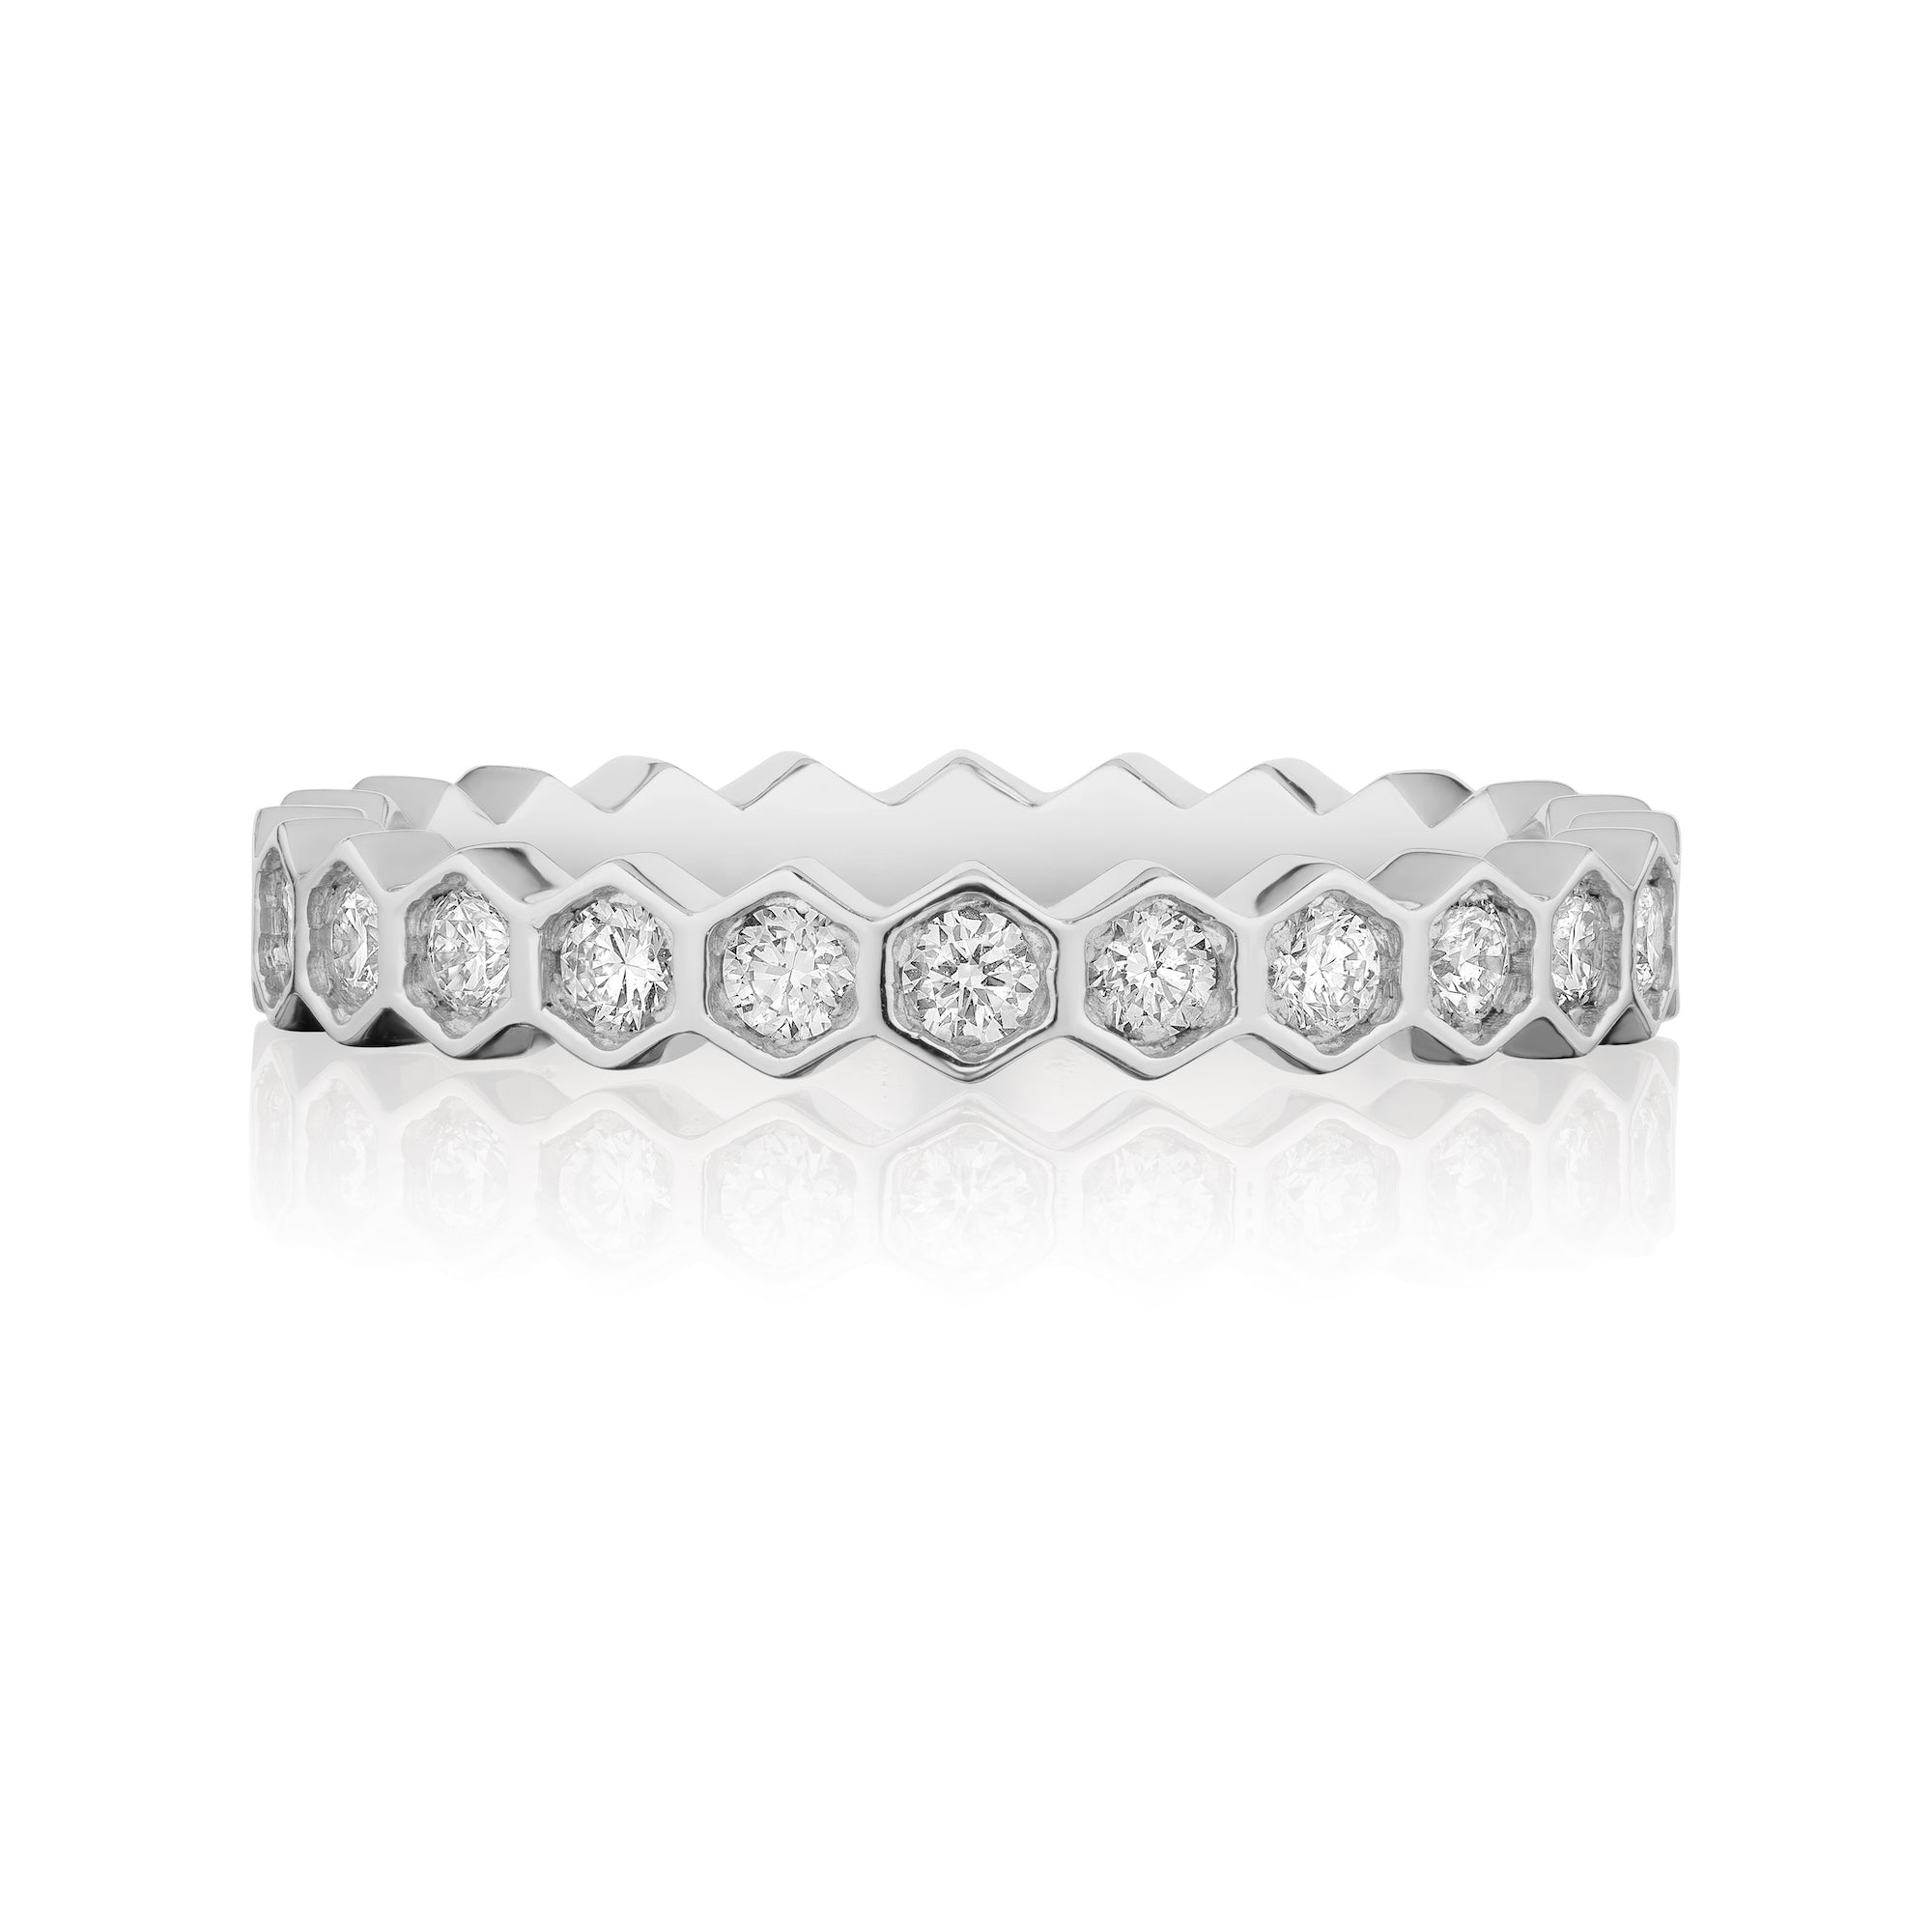 Wedding rings Birmingham stunning designs from Mitchel & Co